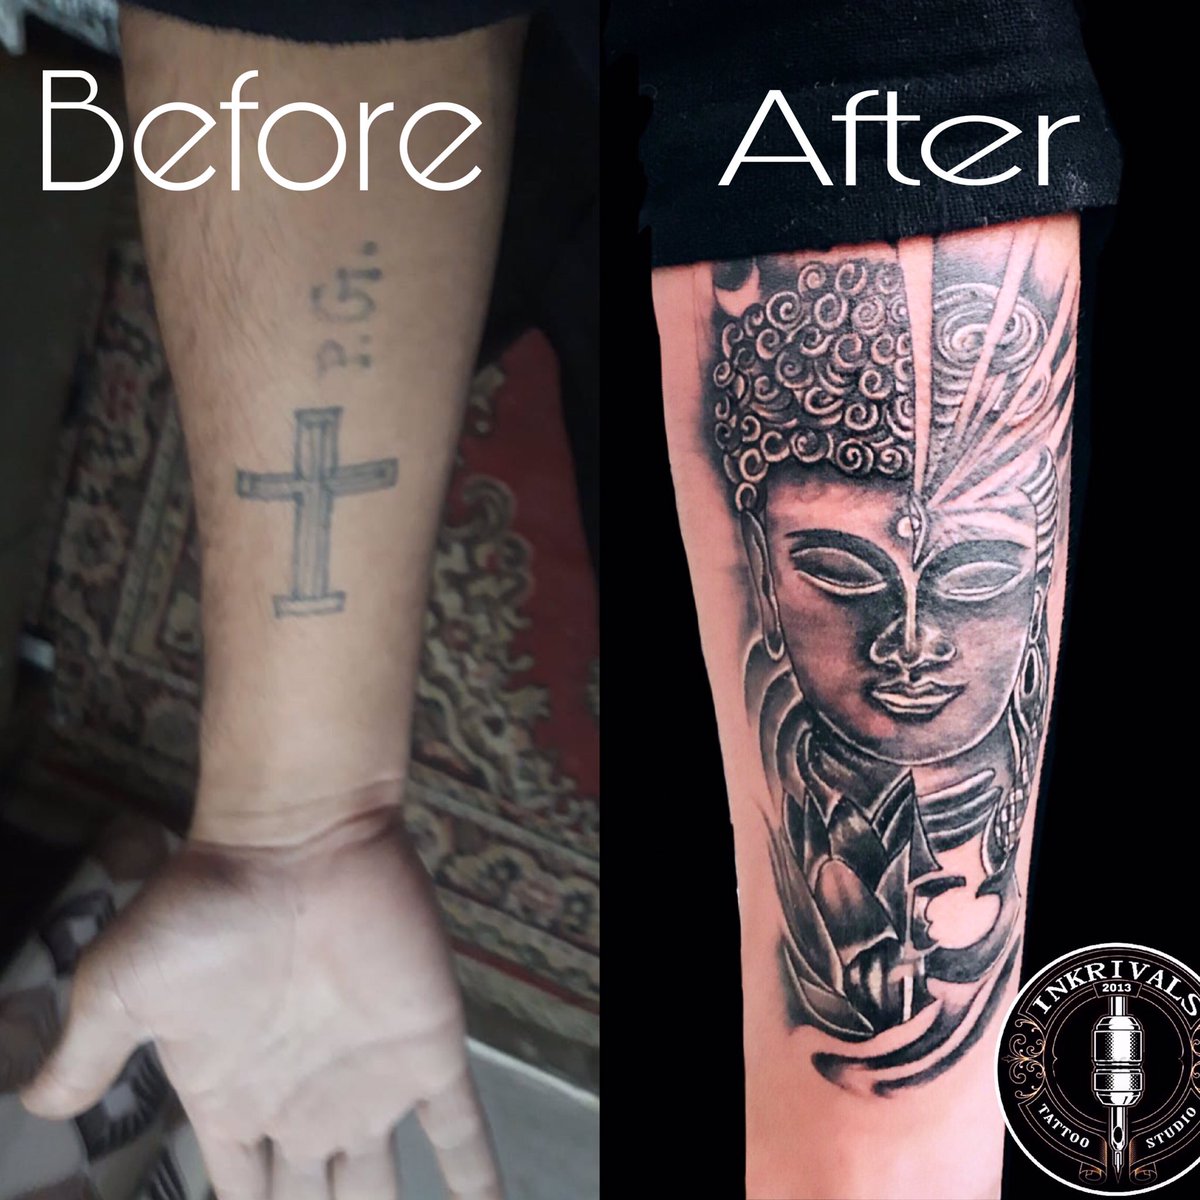 Cover up Tattoo 
#coveruptattoos #INKED #tattoosinindia #Buddha #shivatattoos  #spiritualtattoos #tattoosinmohali #tattooartist #art #blackandgreytattoos #tattoosandpiercings #inkedmen #india